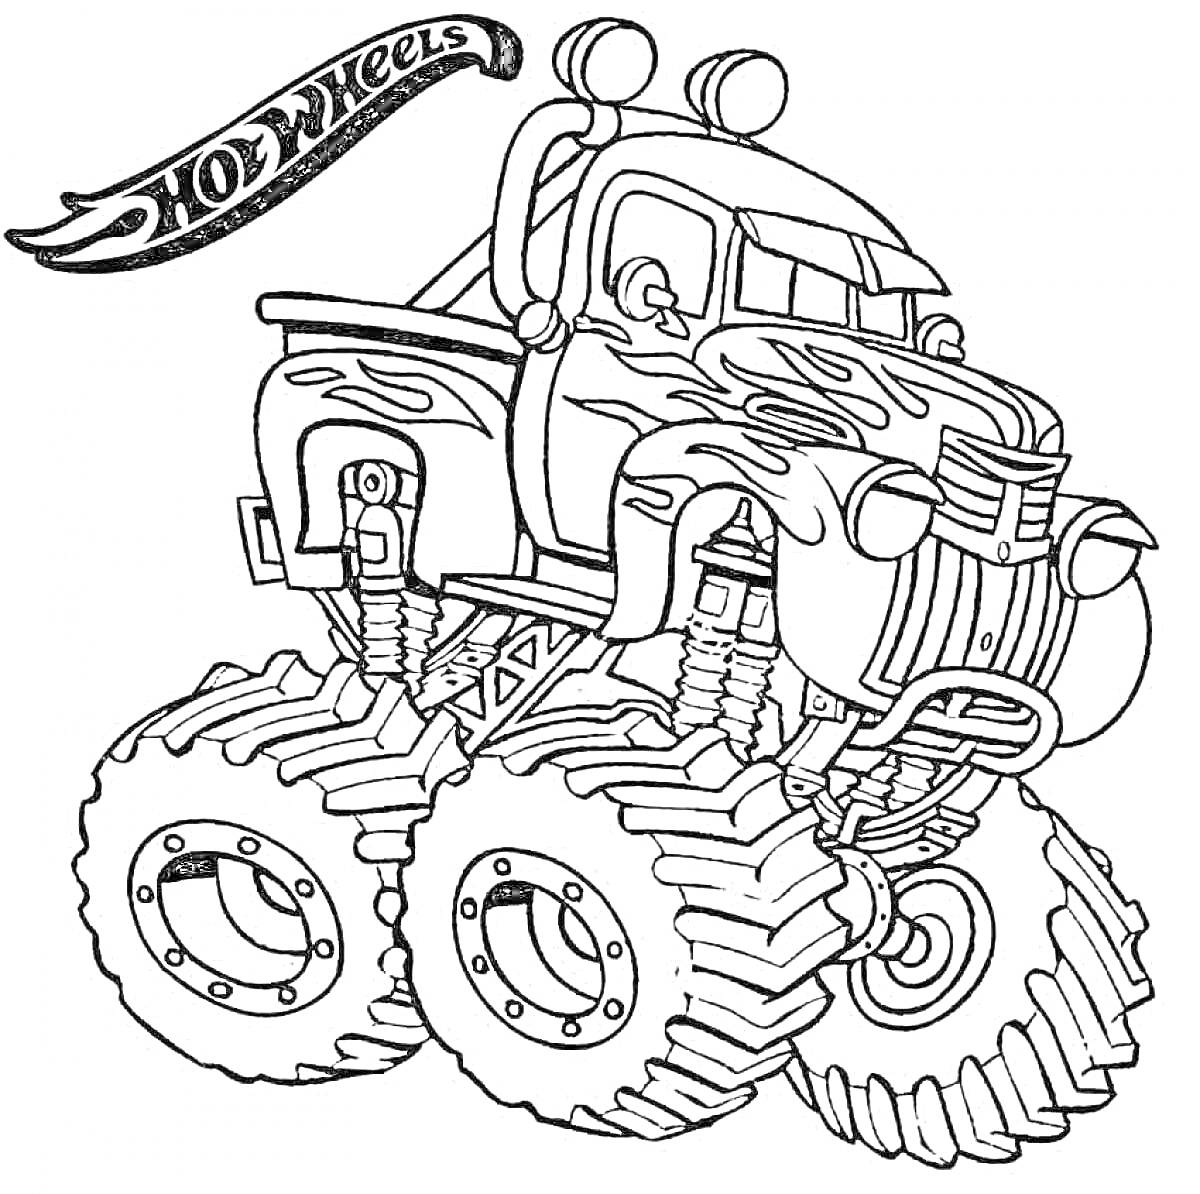 Раскраска монстер трак с большими колёсами, фары на крыше, логотип 